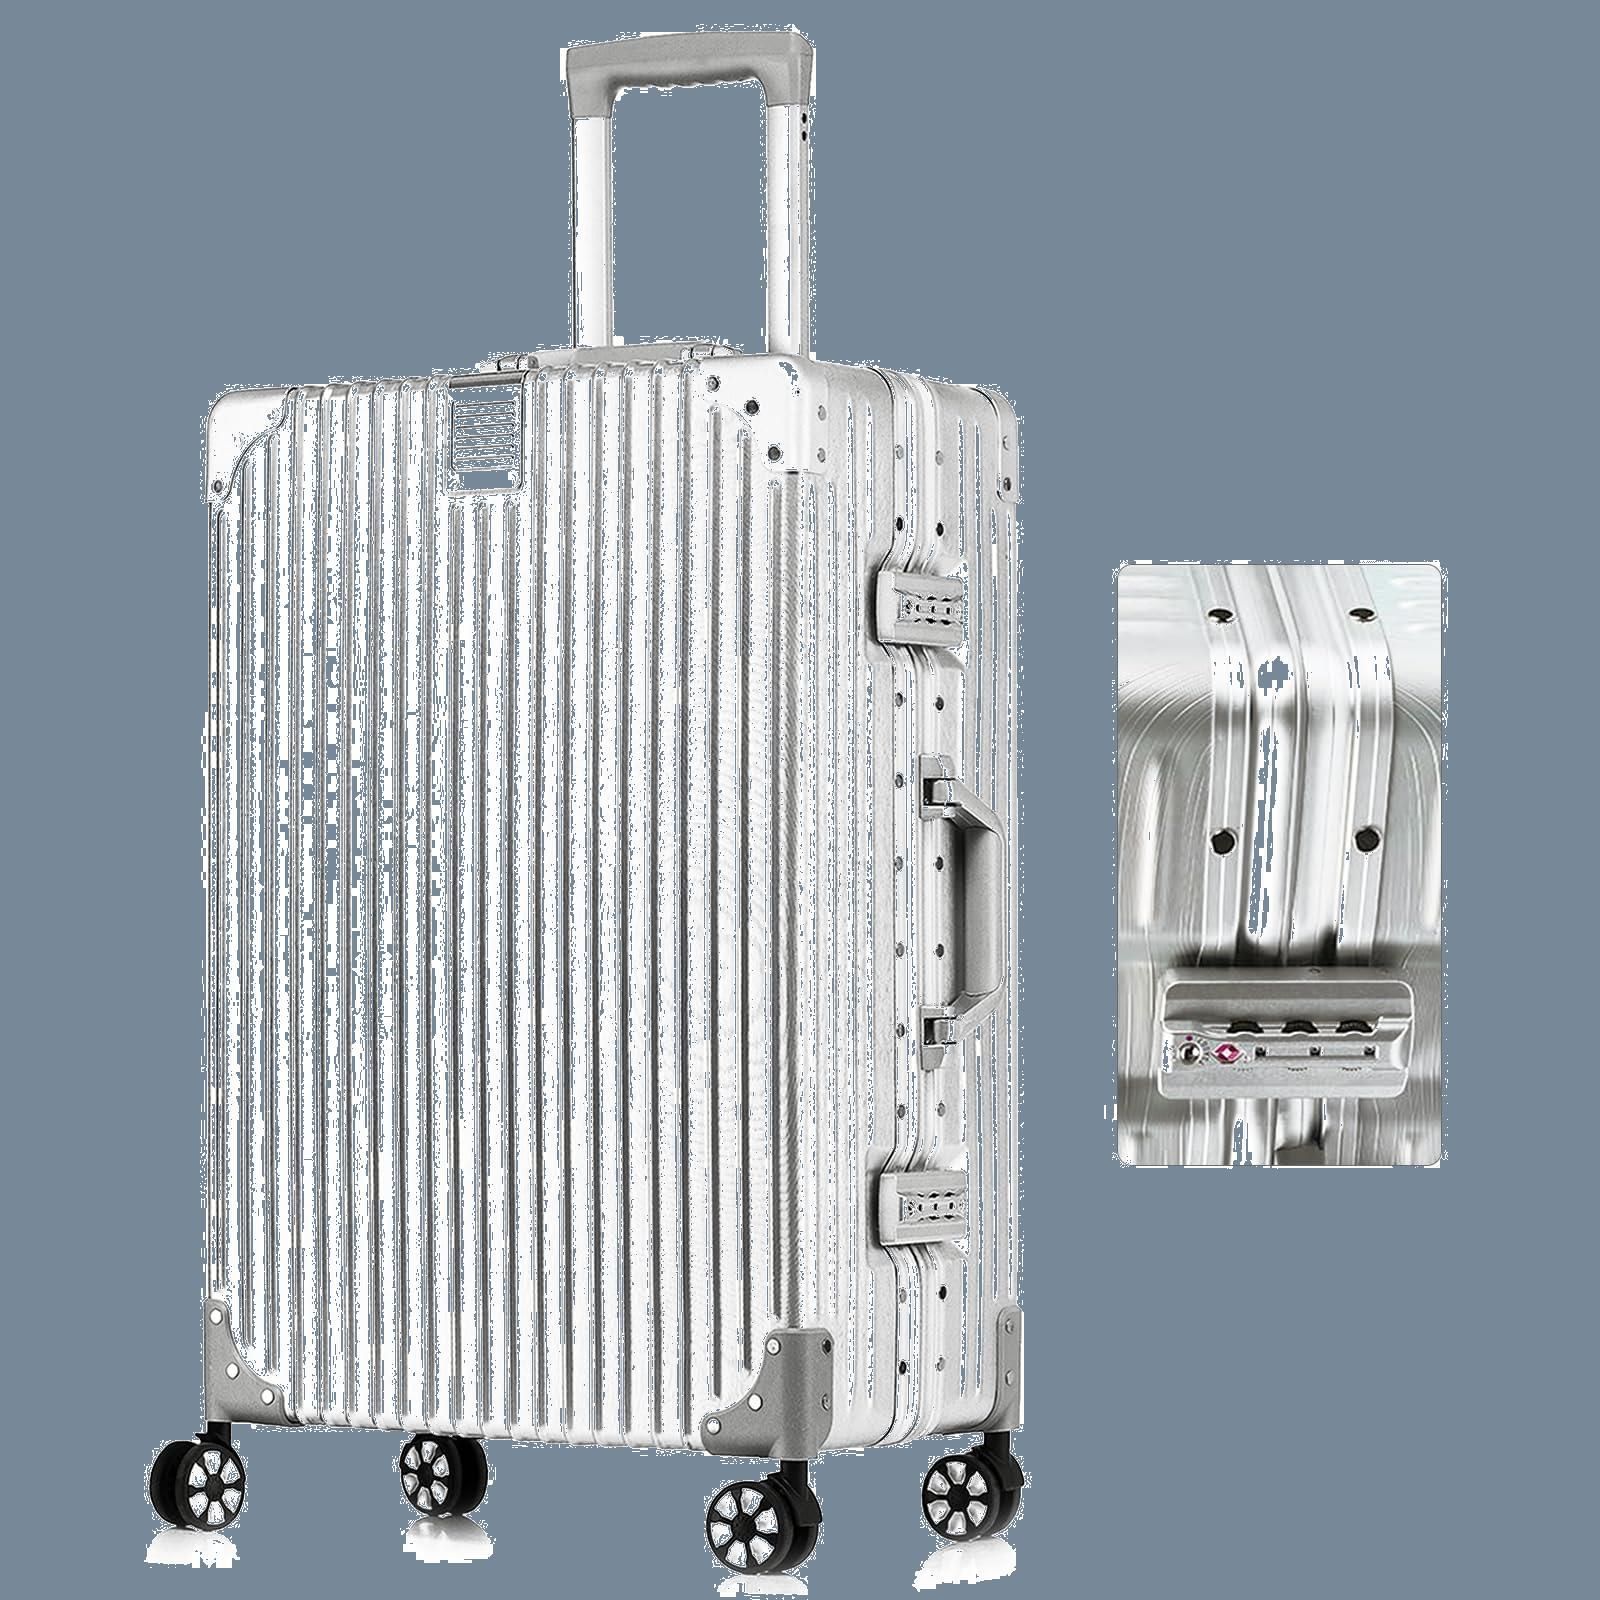 Airmood] スーツケース アルミフレーム キャリーケース 機内持ち込み 軽量 トロリーケース キャリーバッグ TSAロック 静音  ダブルキャスター 大型 耐衝撃 出張 旅行 ミニ SSサイズ グレー シルバー 1-2泊 - メルカリ